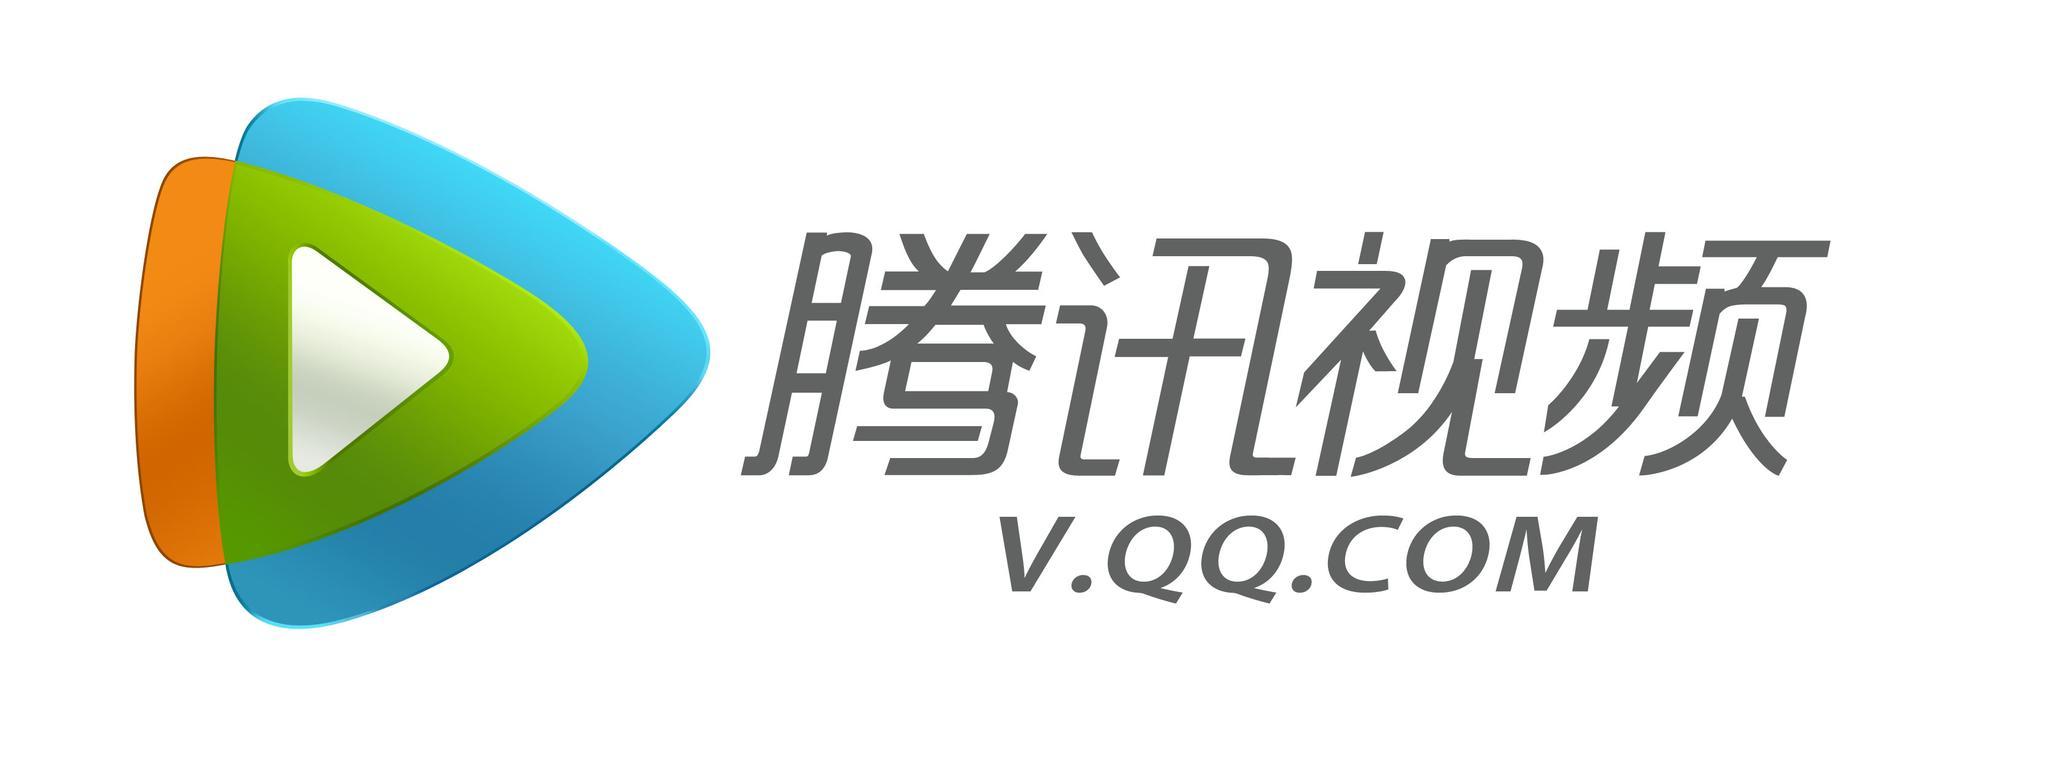 Qq.com Logo - Advertise in China | Digital Consulting | Digital Advertising ...